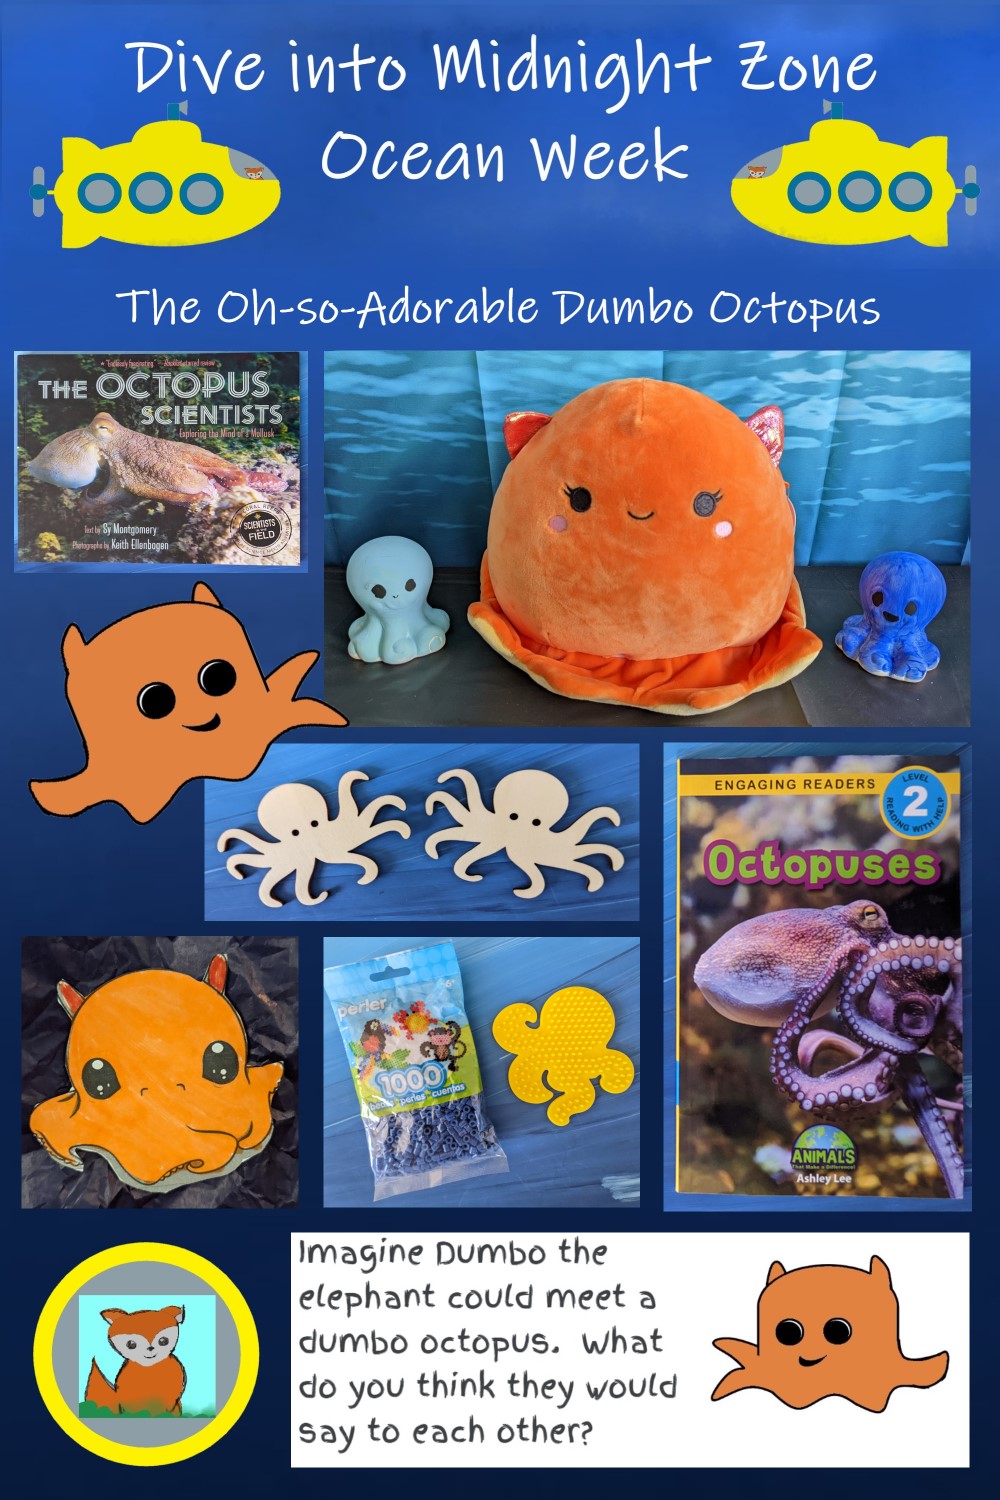 Amazing Ocean Week – Dive Into The Midnight Zone: Dumbo Octopus